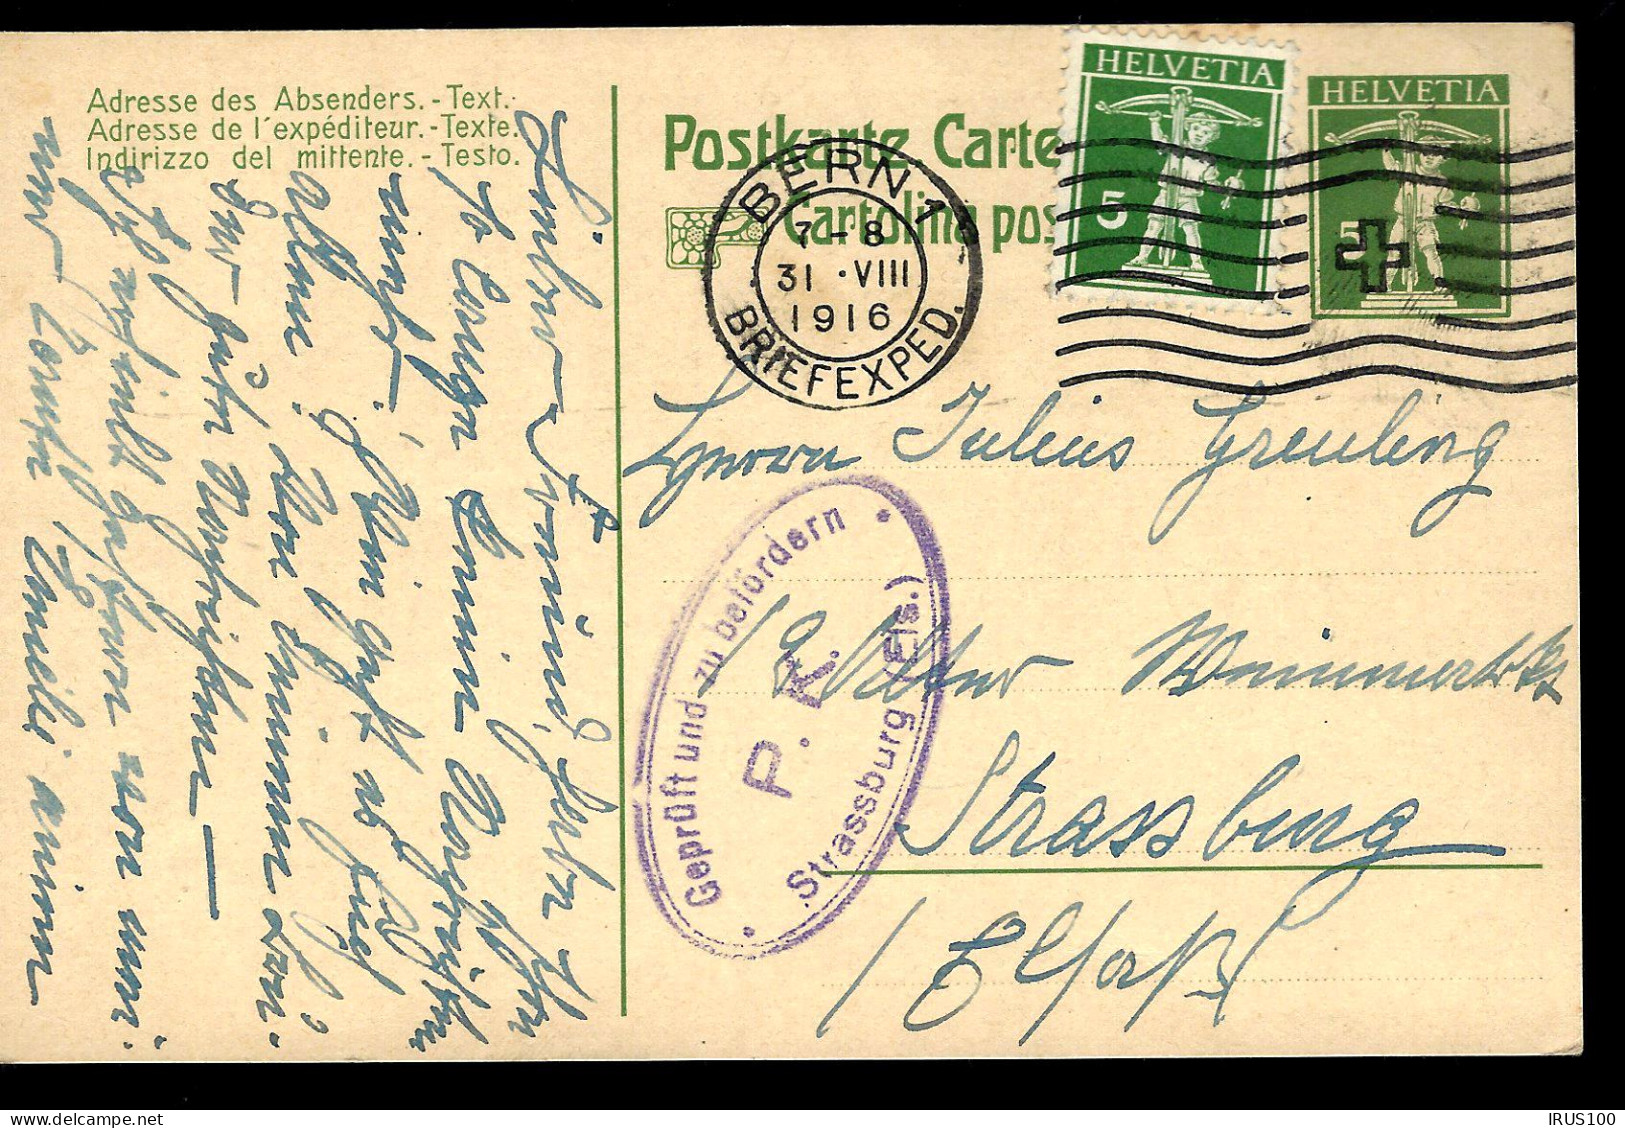 SUISSE - BERN -  1916 - CENSURE - ZENSUR -CENSORSHIP - - Stamped Stationery